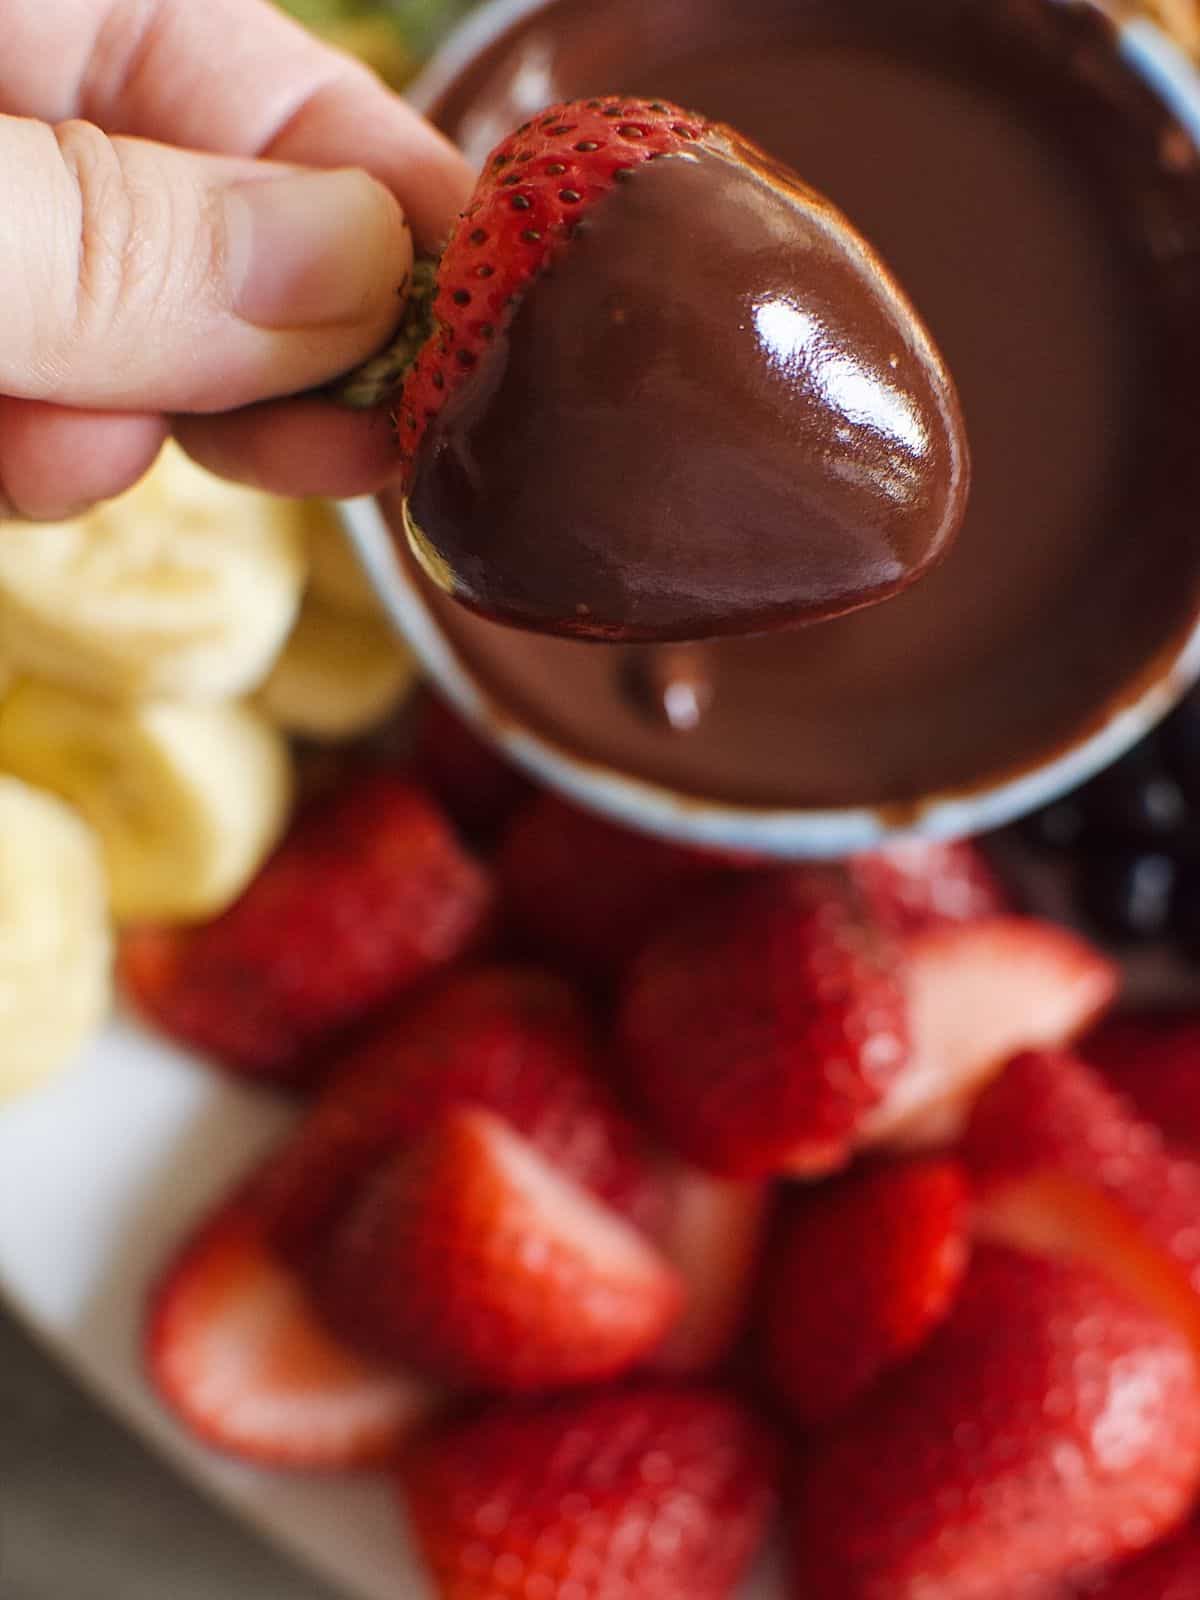 chocolate dipped strawberries.